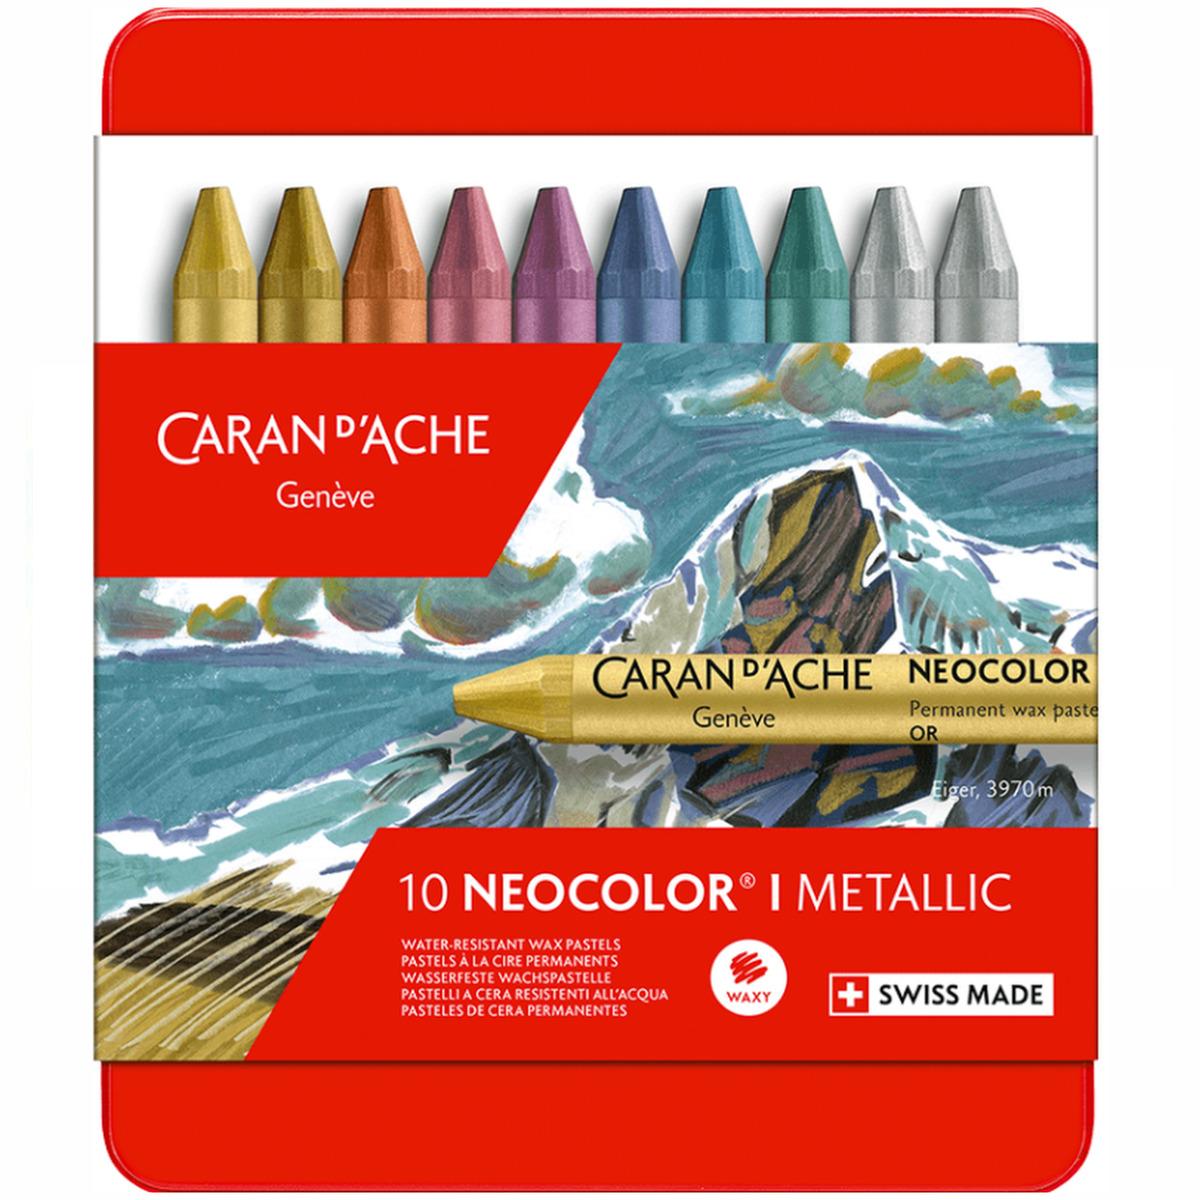 CARAN D'ACHE Genève - Neocolor 1 Metallic - Set 10 pastelli a cera resistenti all'acqua